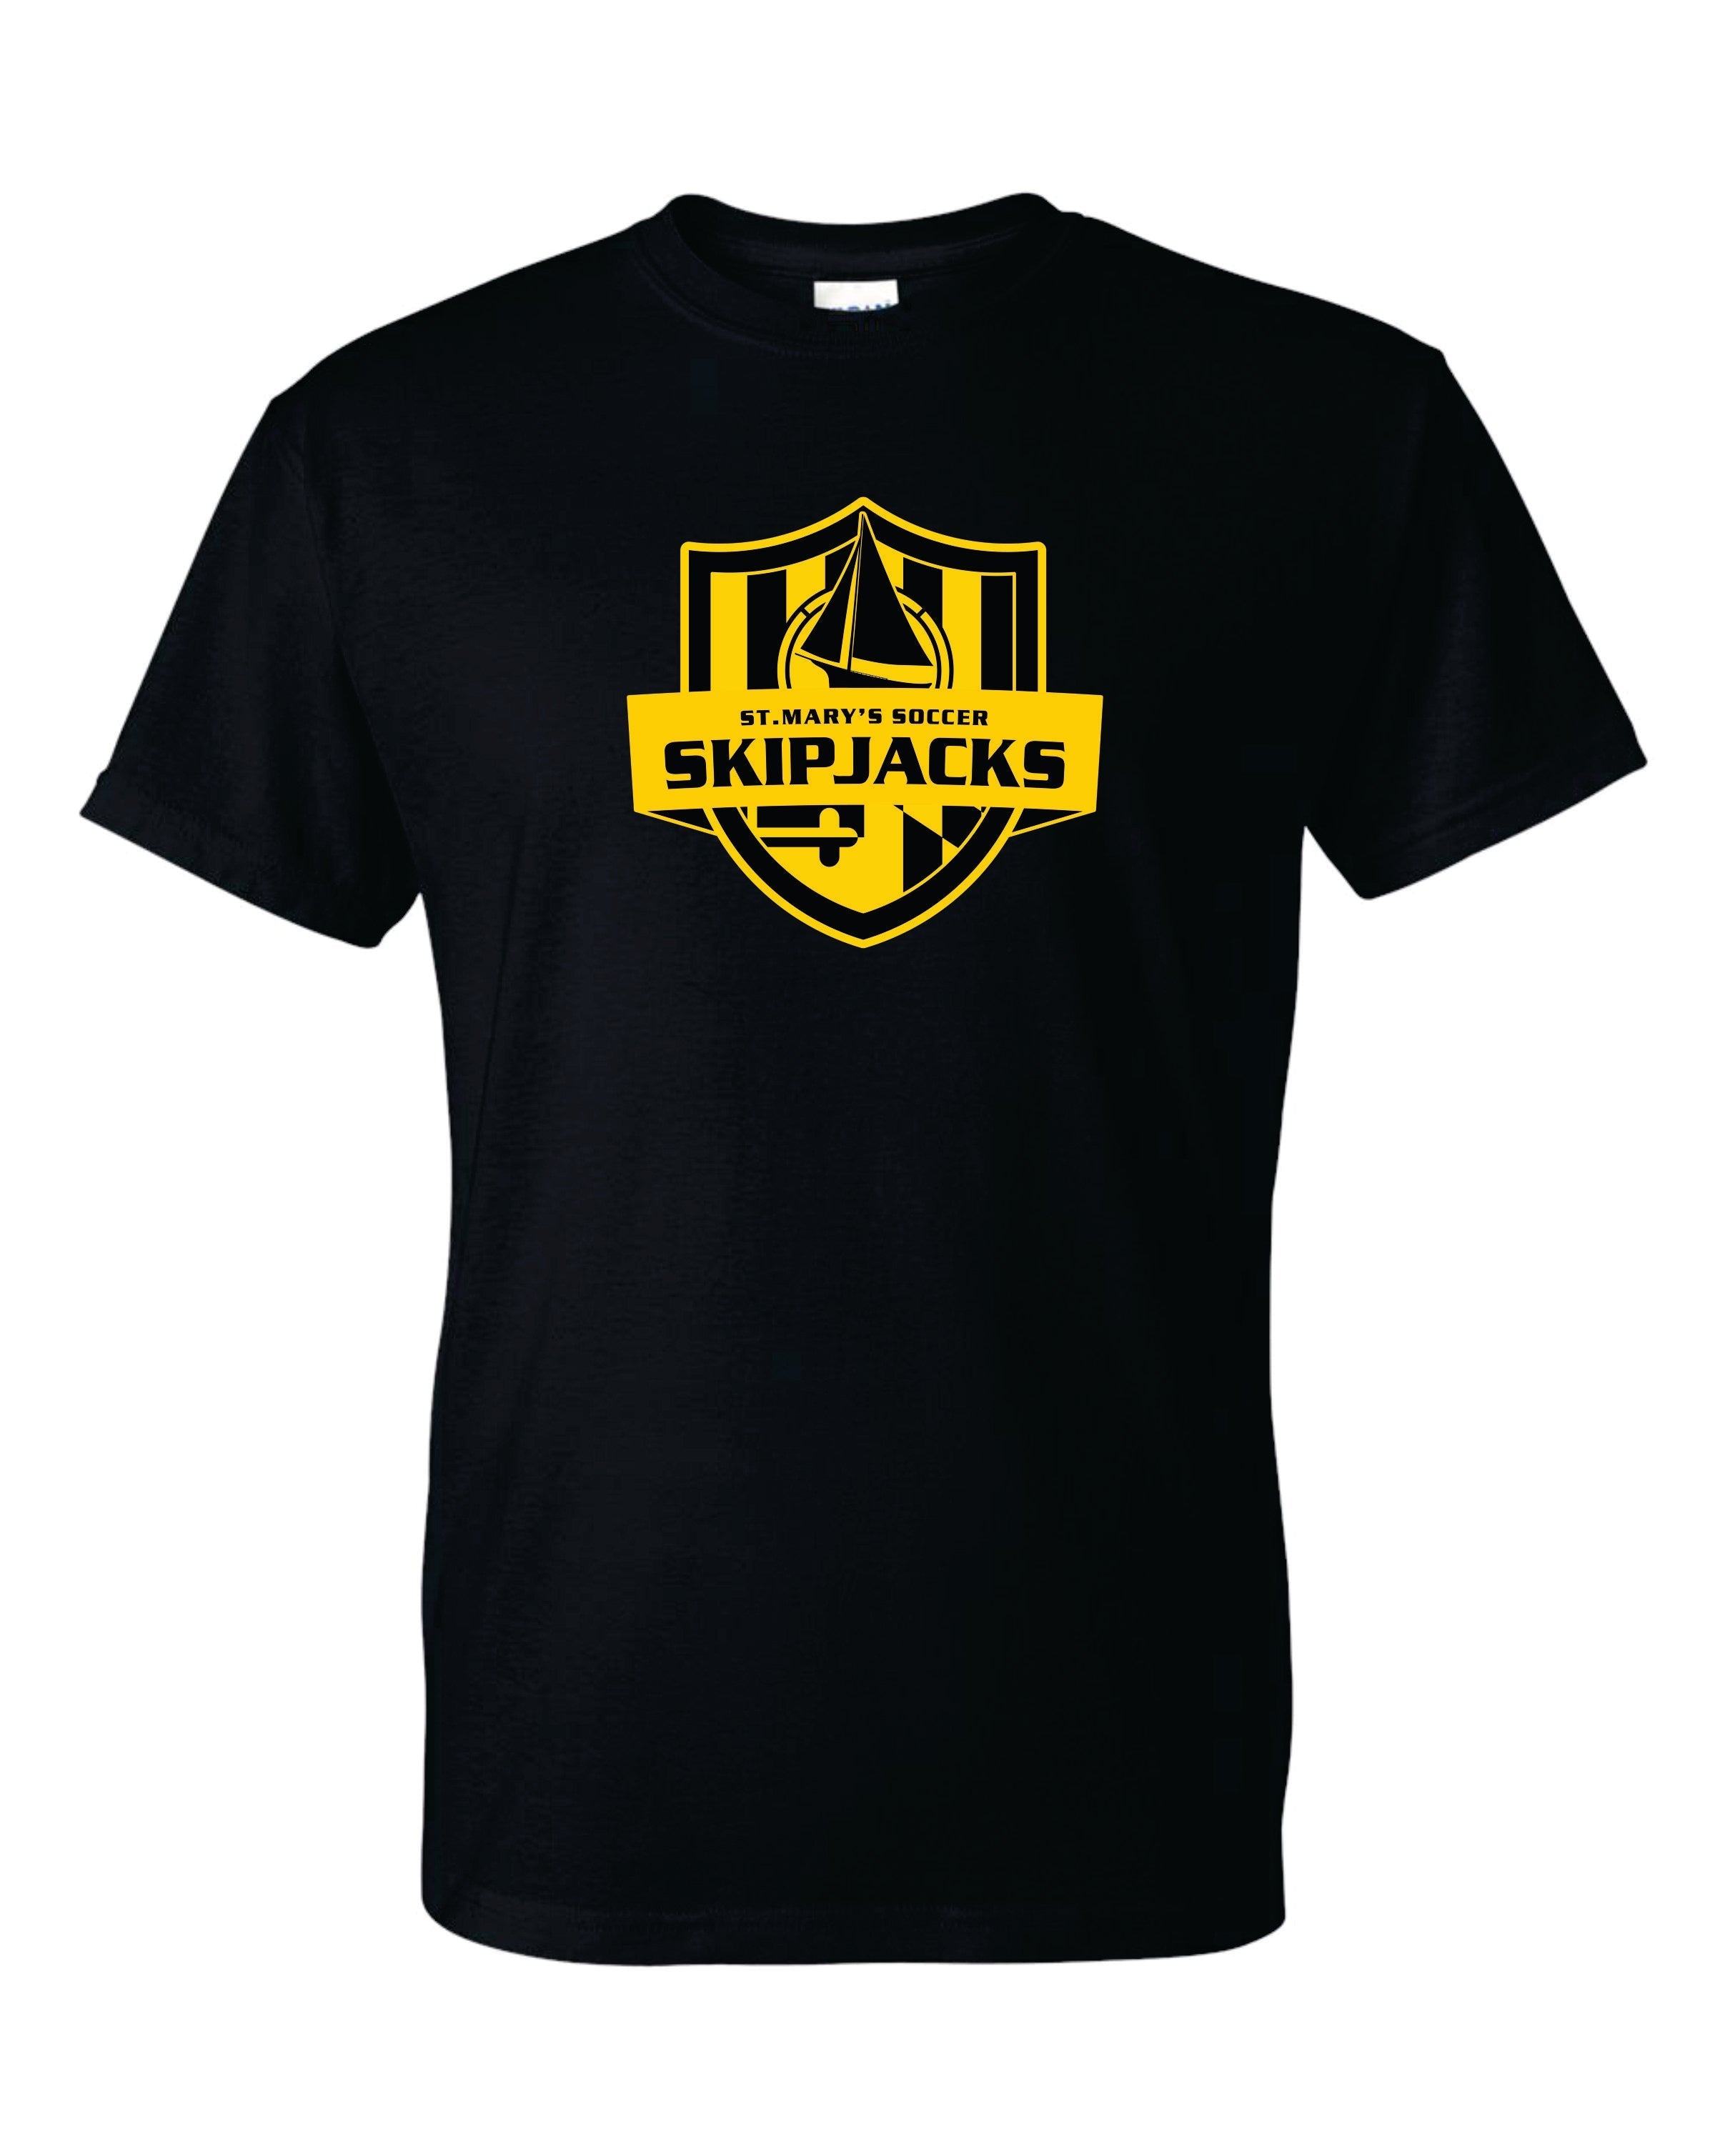 Skipjacks Short Sleeve T-Shirt 50/50 Blend YOUTH